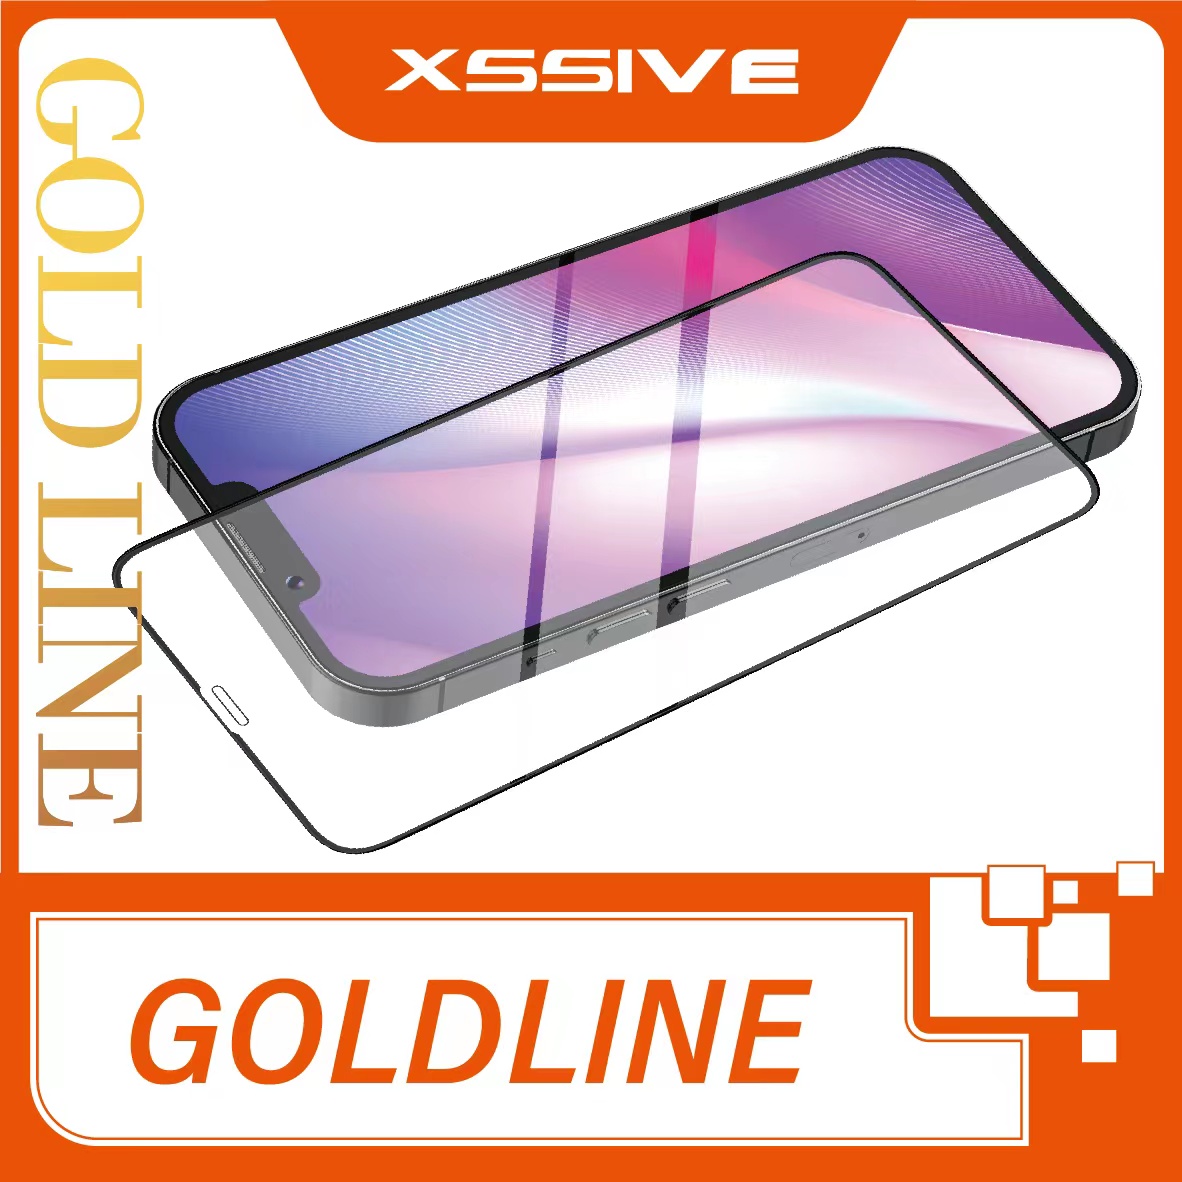 Artikelgroep - Smartphone - Goldline - 10%